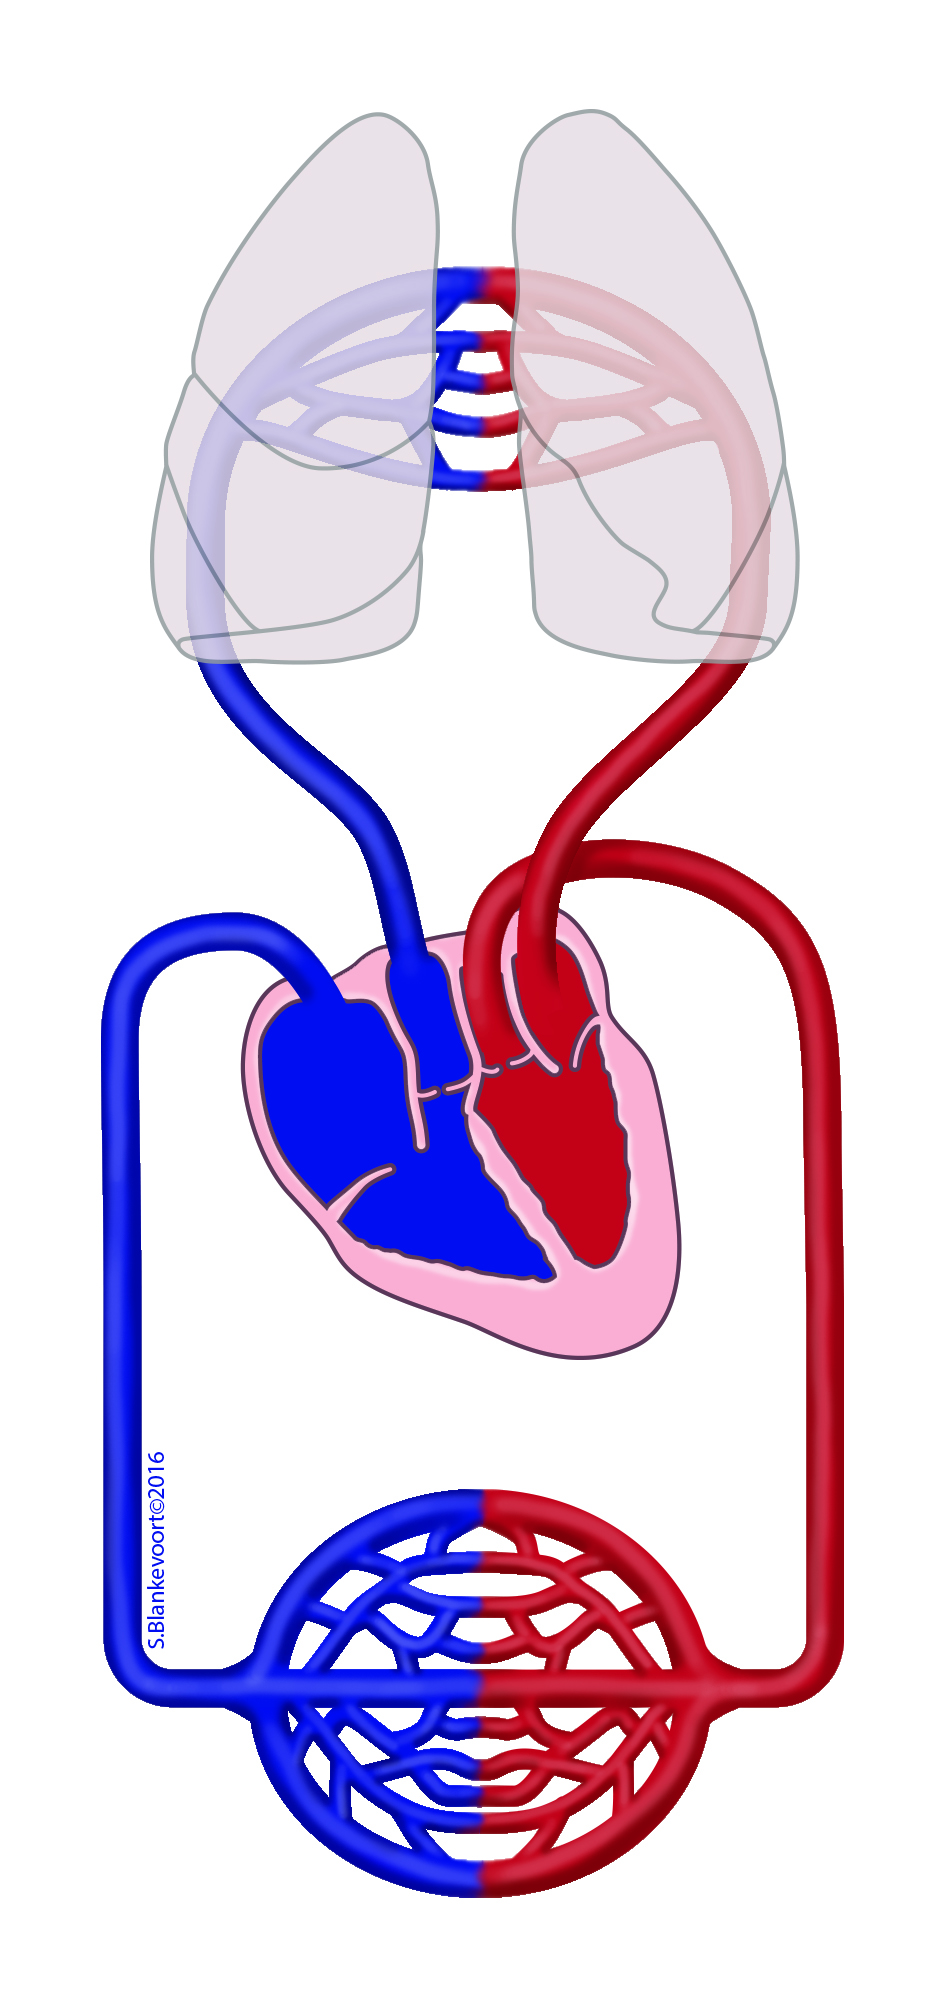 Circulatory system (pulmonary and systemic circulation)